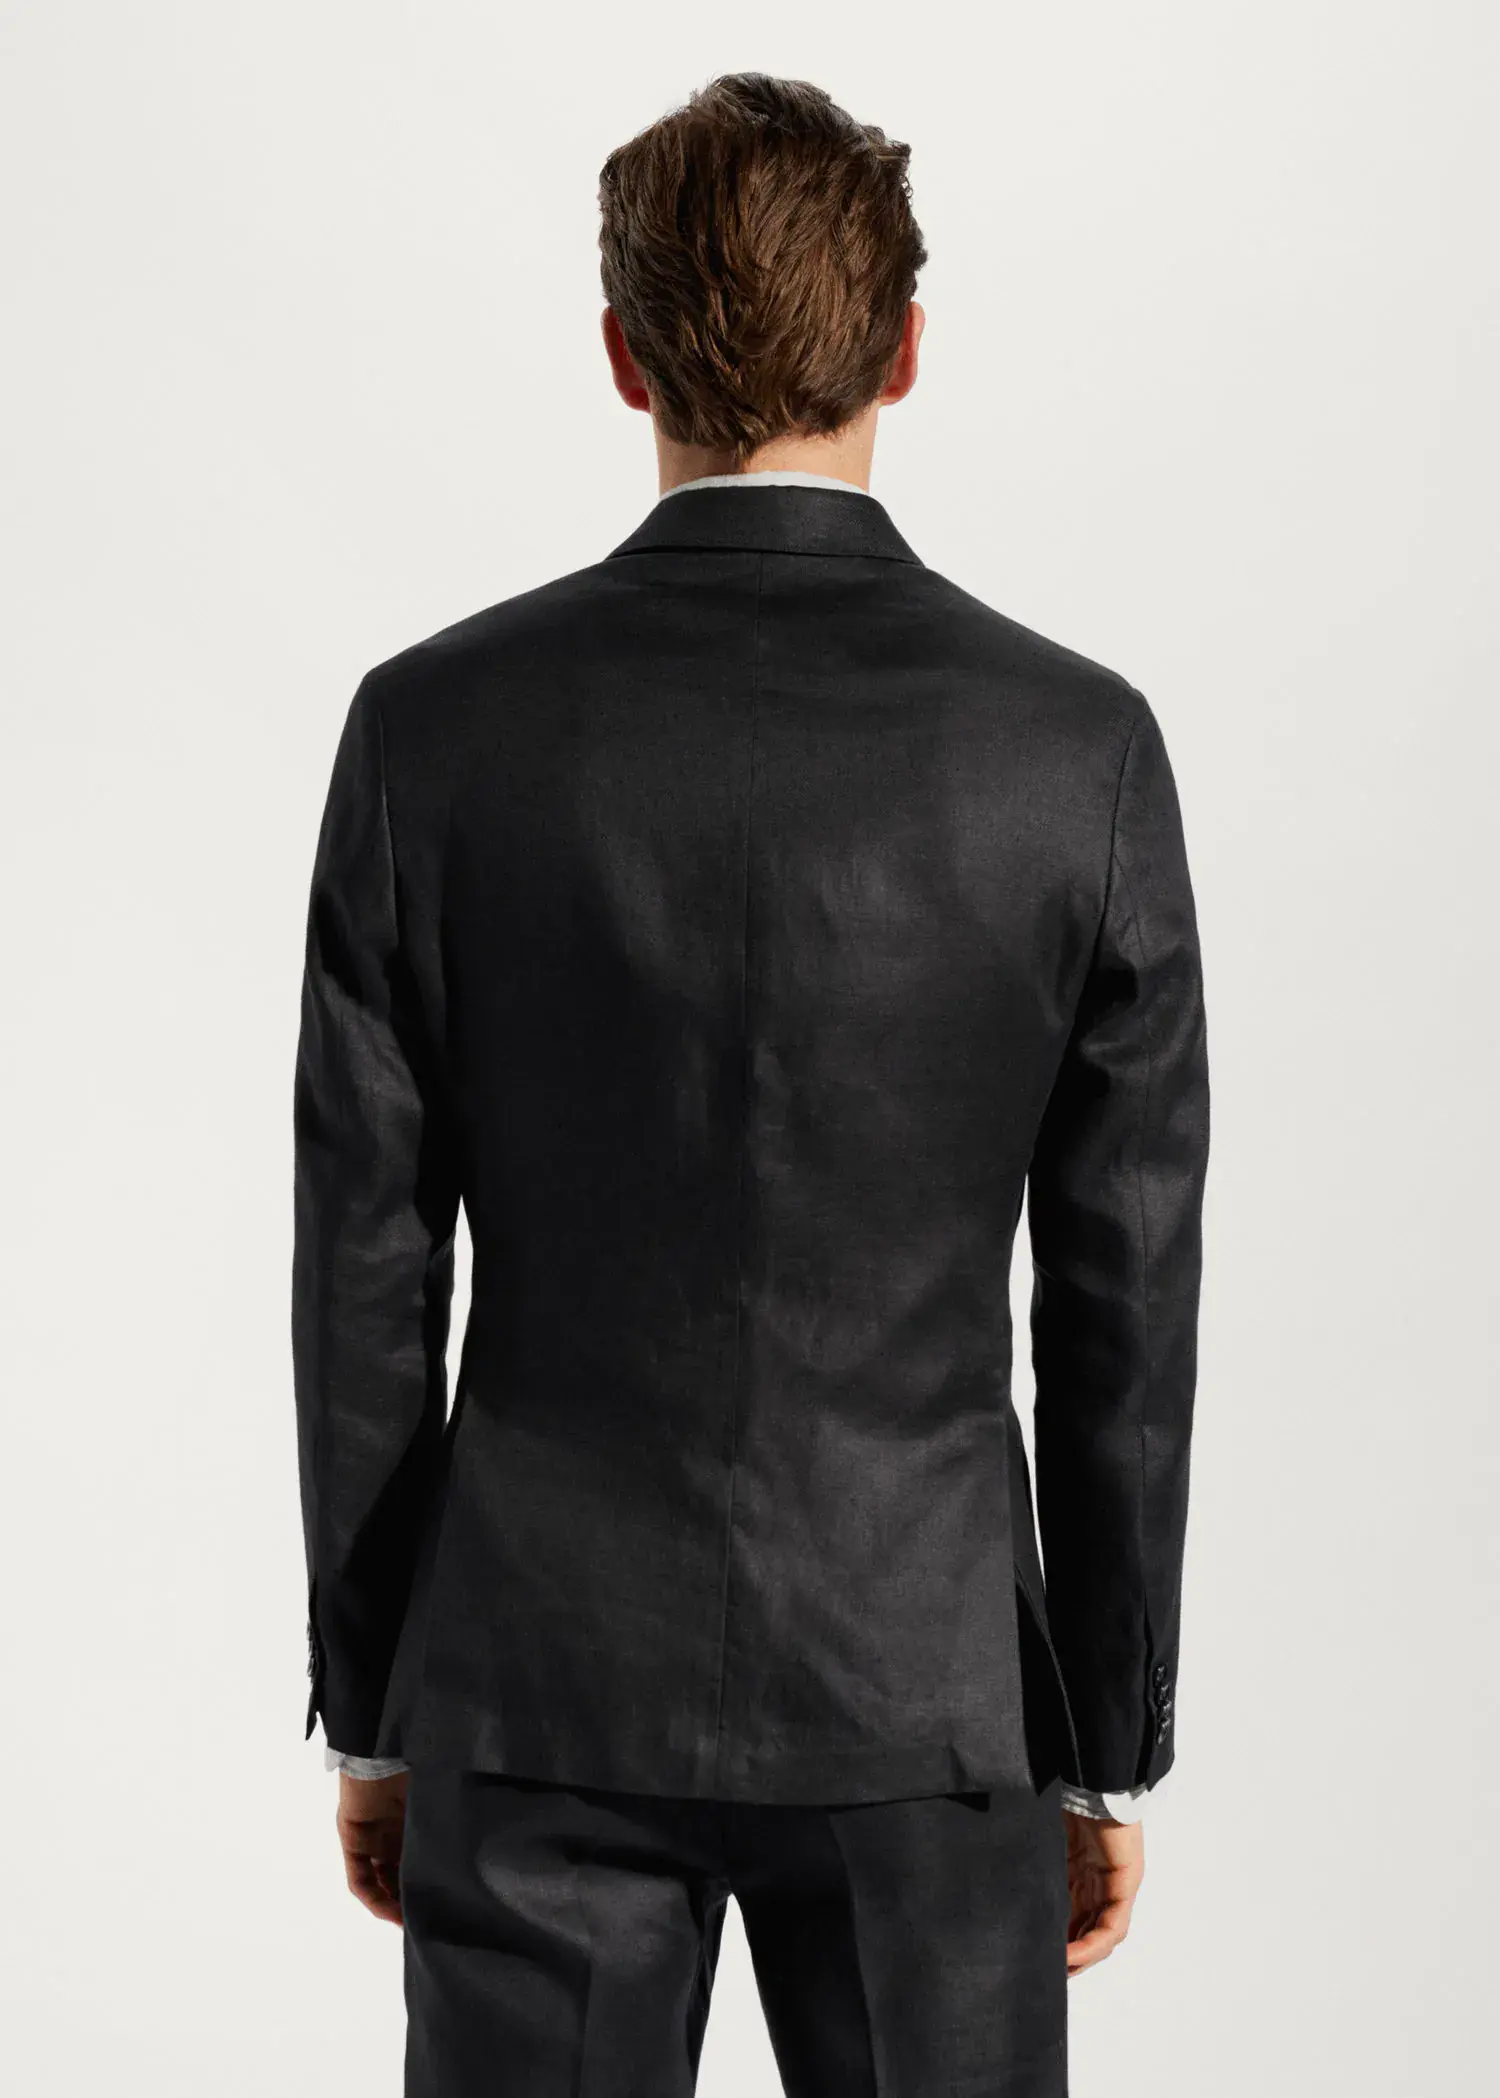 Mango Blazer suit 100% linen. a man wearing a black jacket and brown pants. 